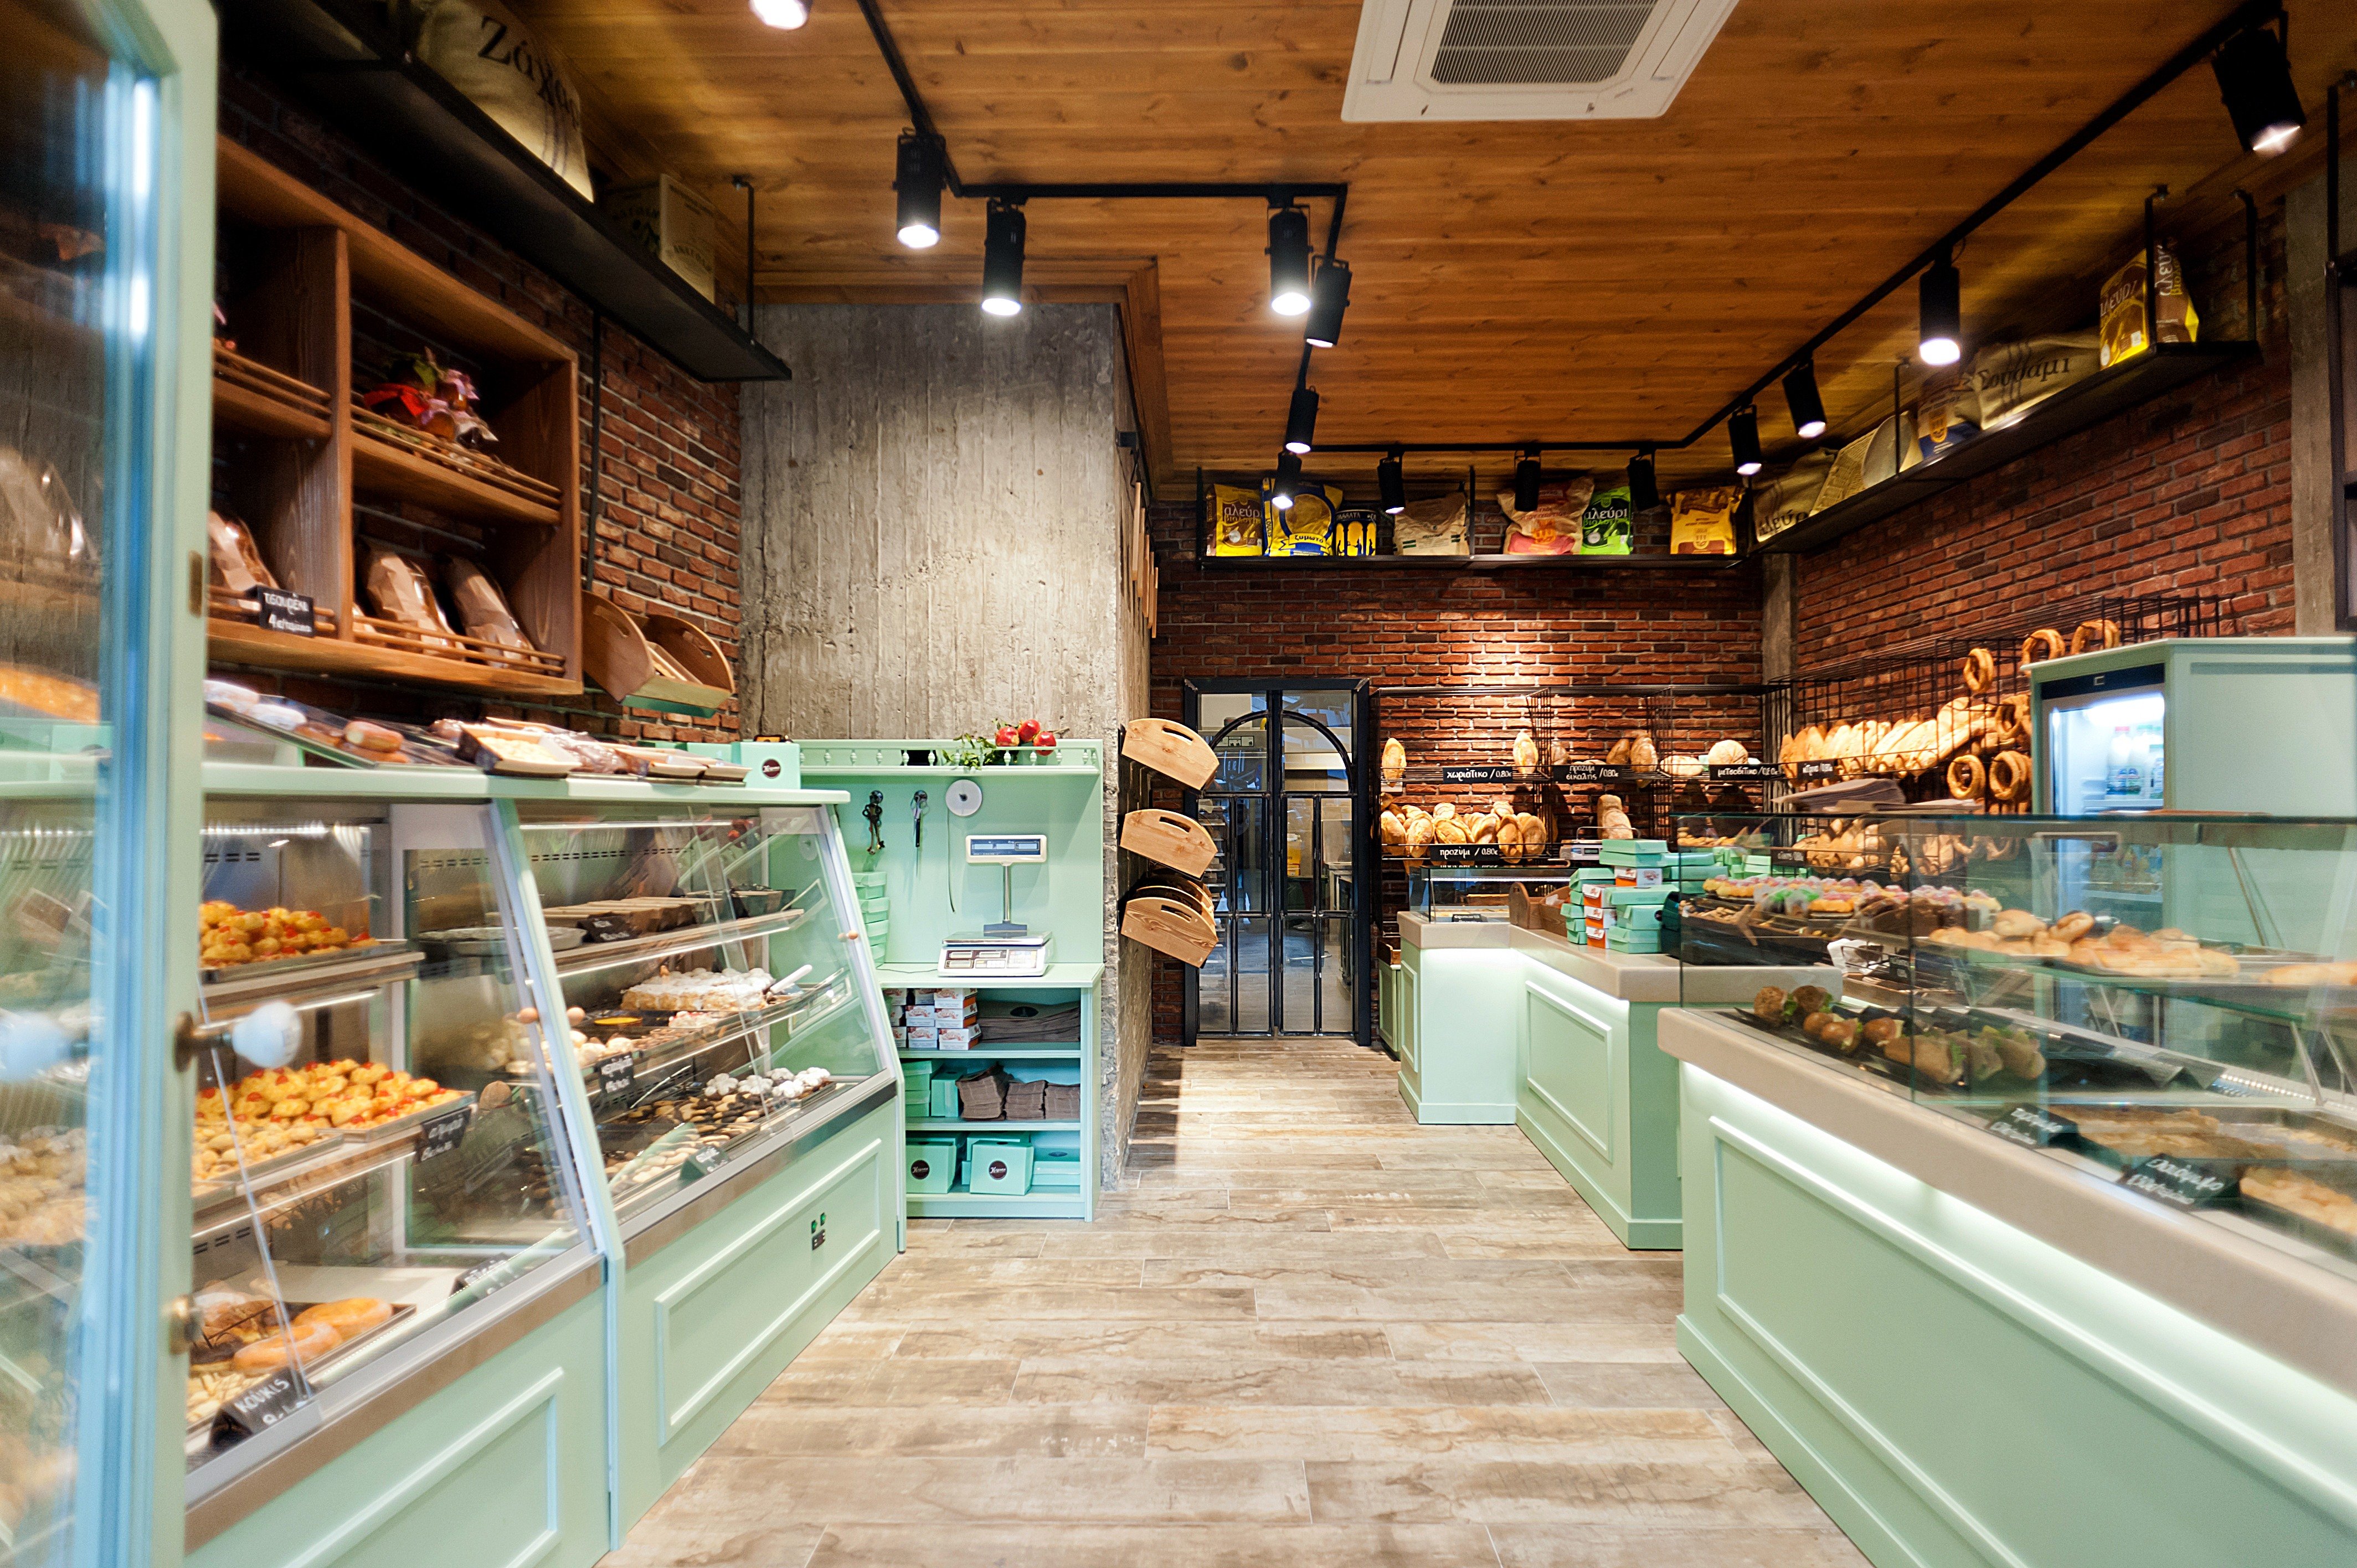 bakery shop interior design